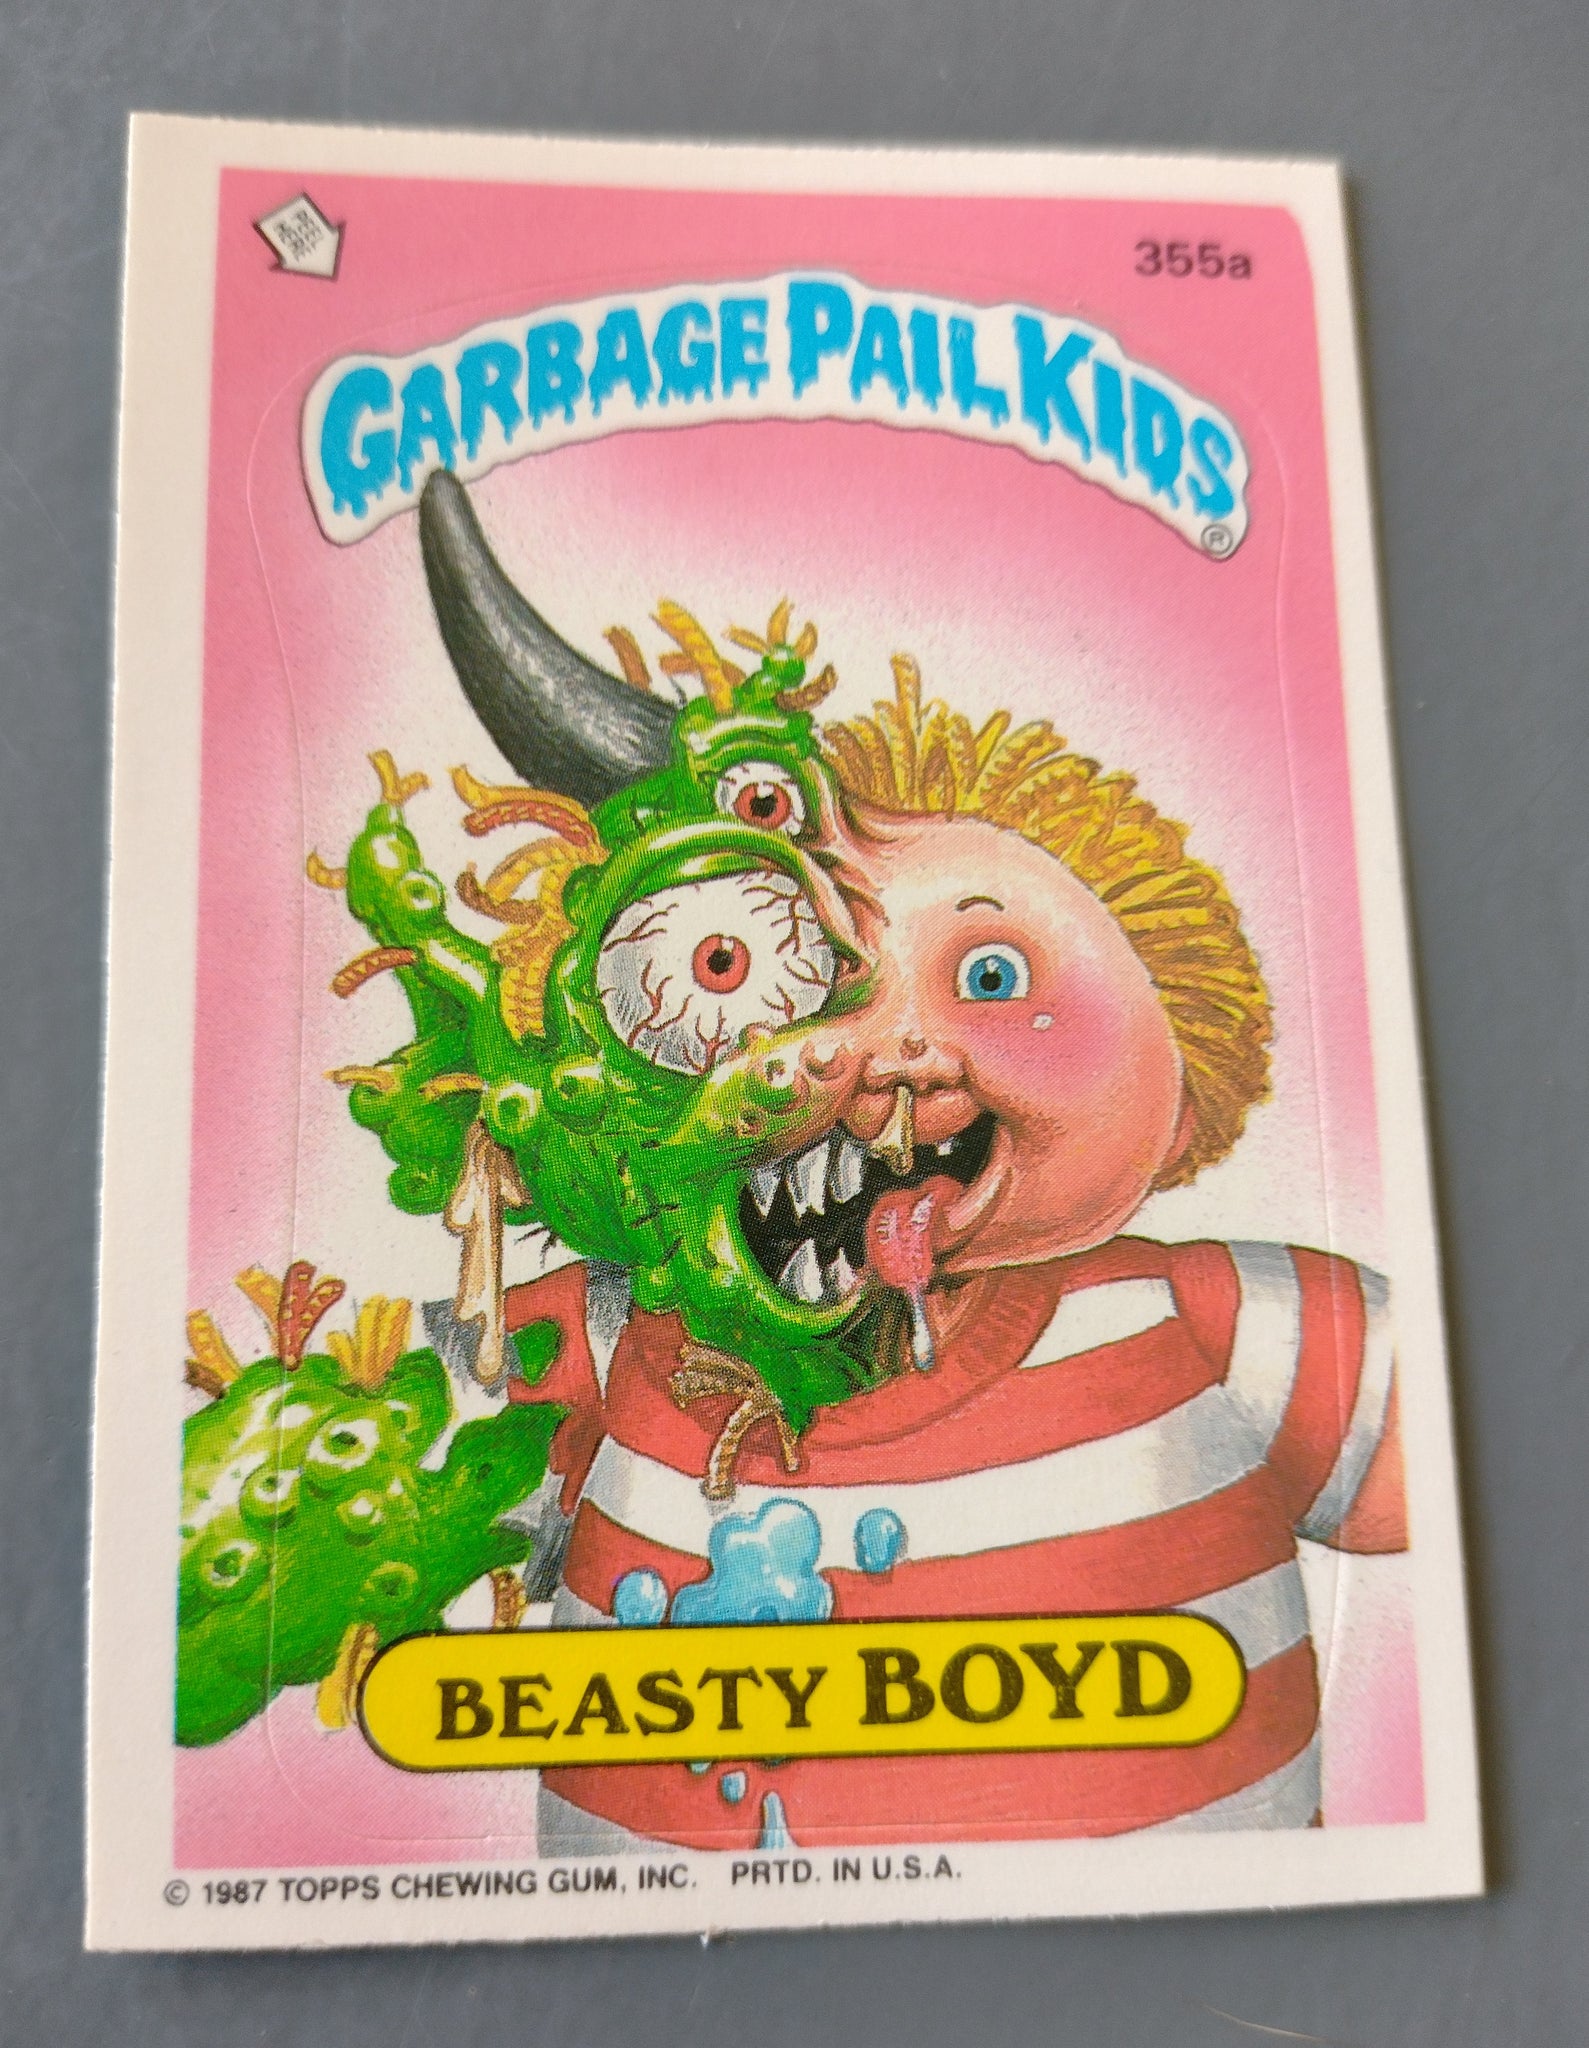 Garbage Pail Kids Original Series 9 #355a - Beasty Boyd Sticker